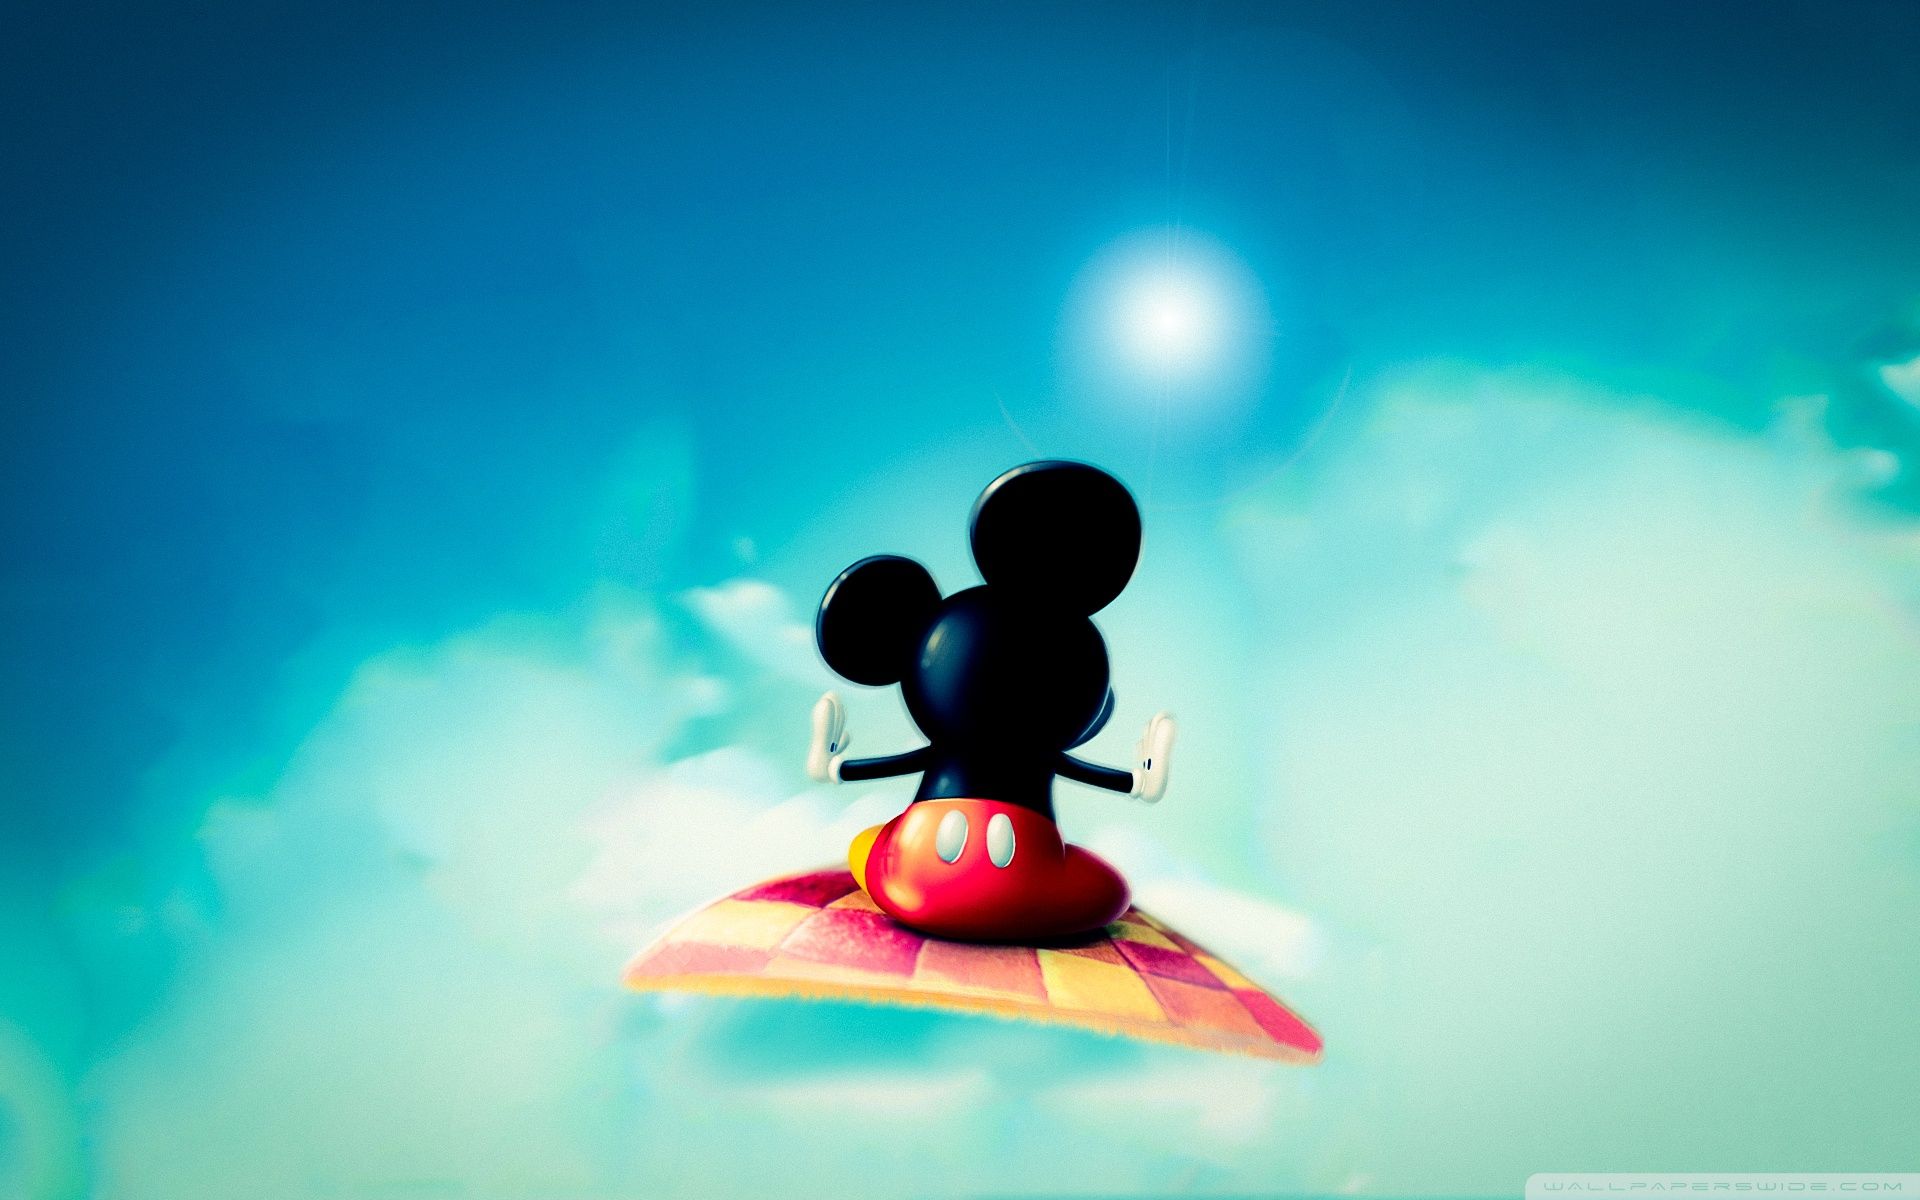 Mickey Mouse Minimal Logo Art Wallpapers